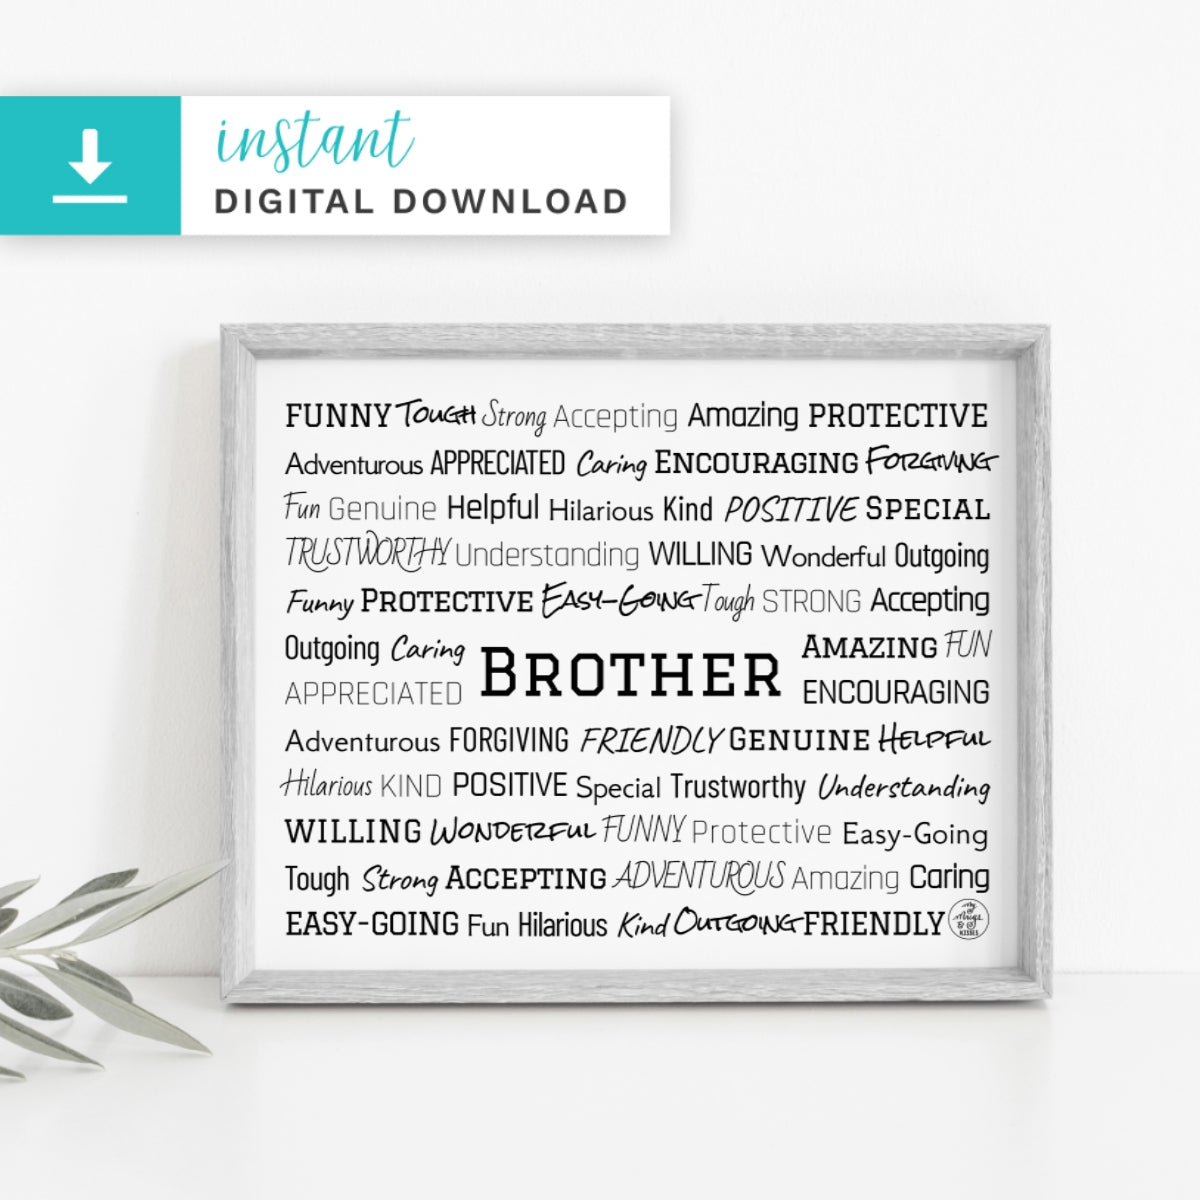 Brother Digital Download